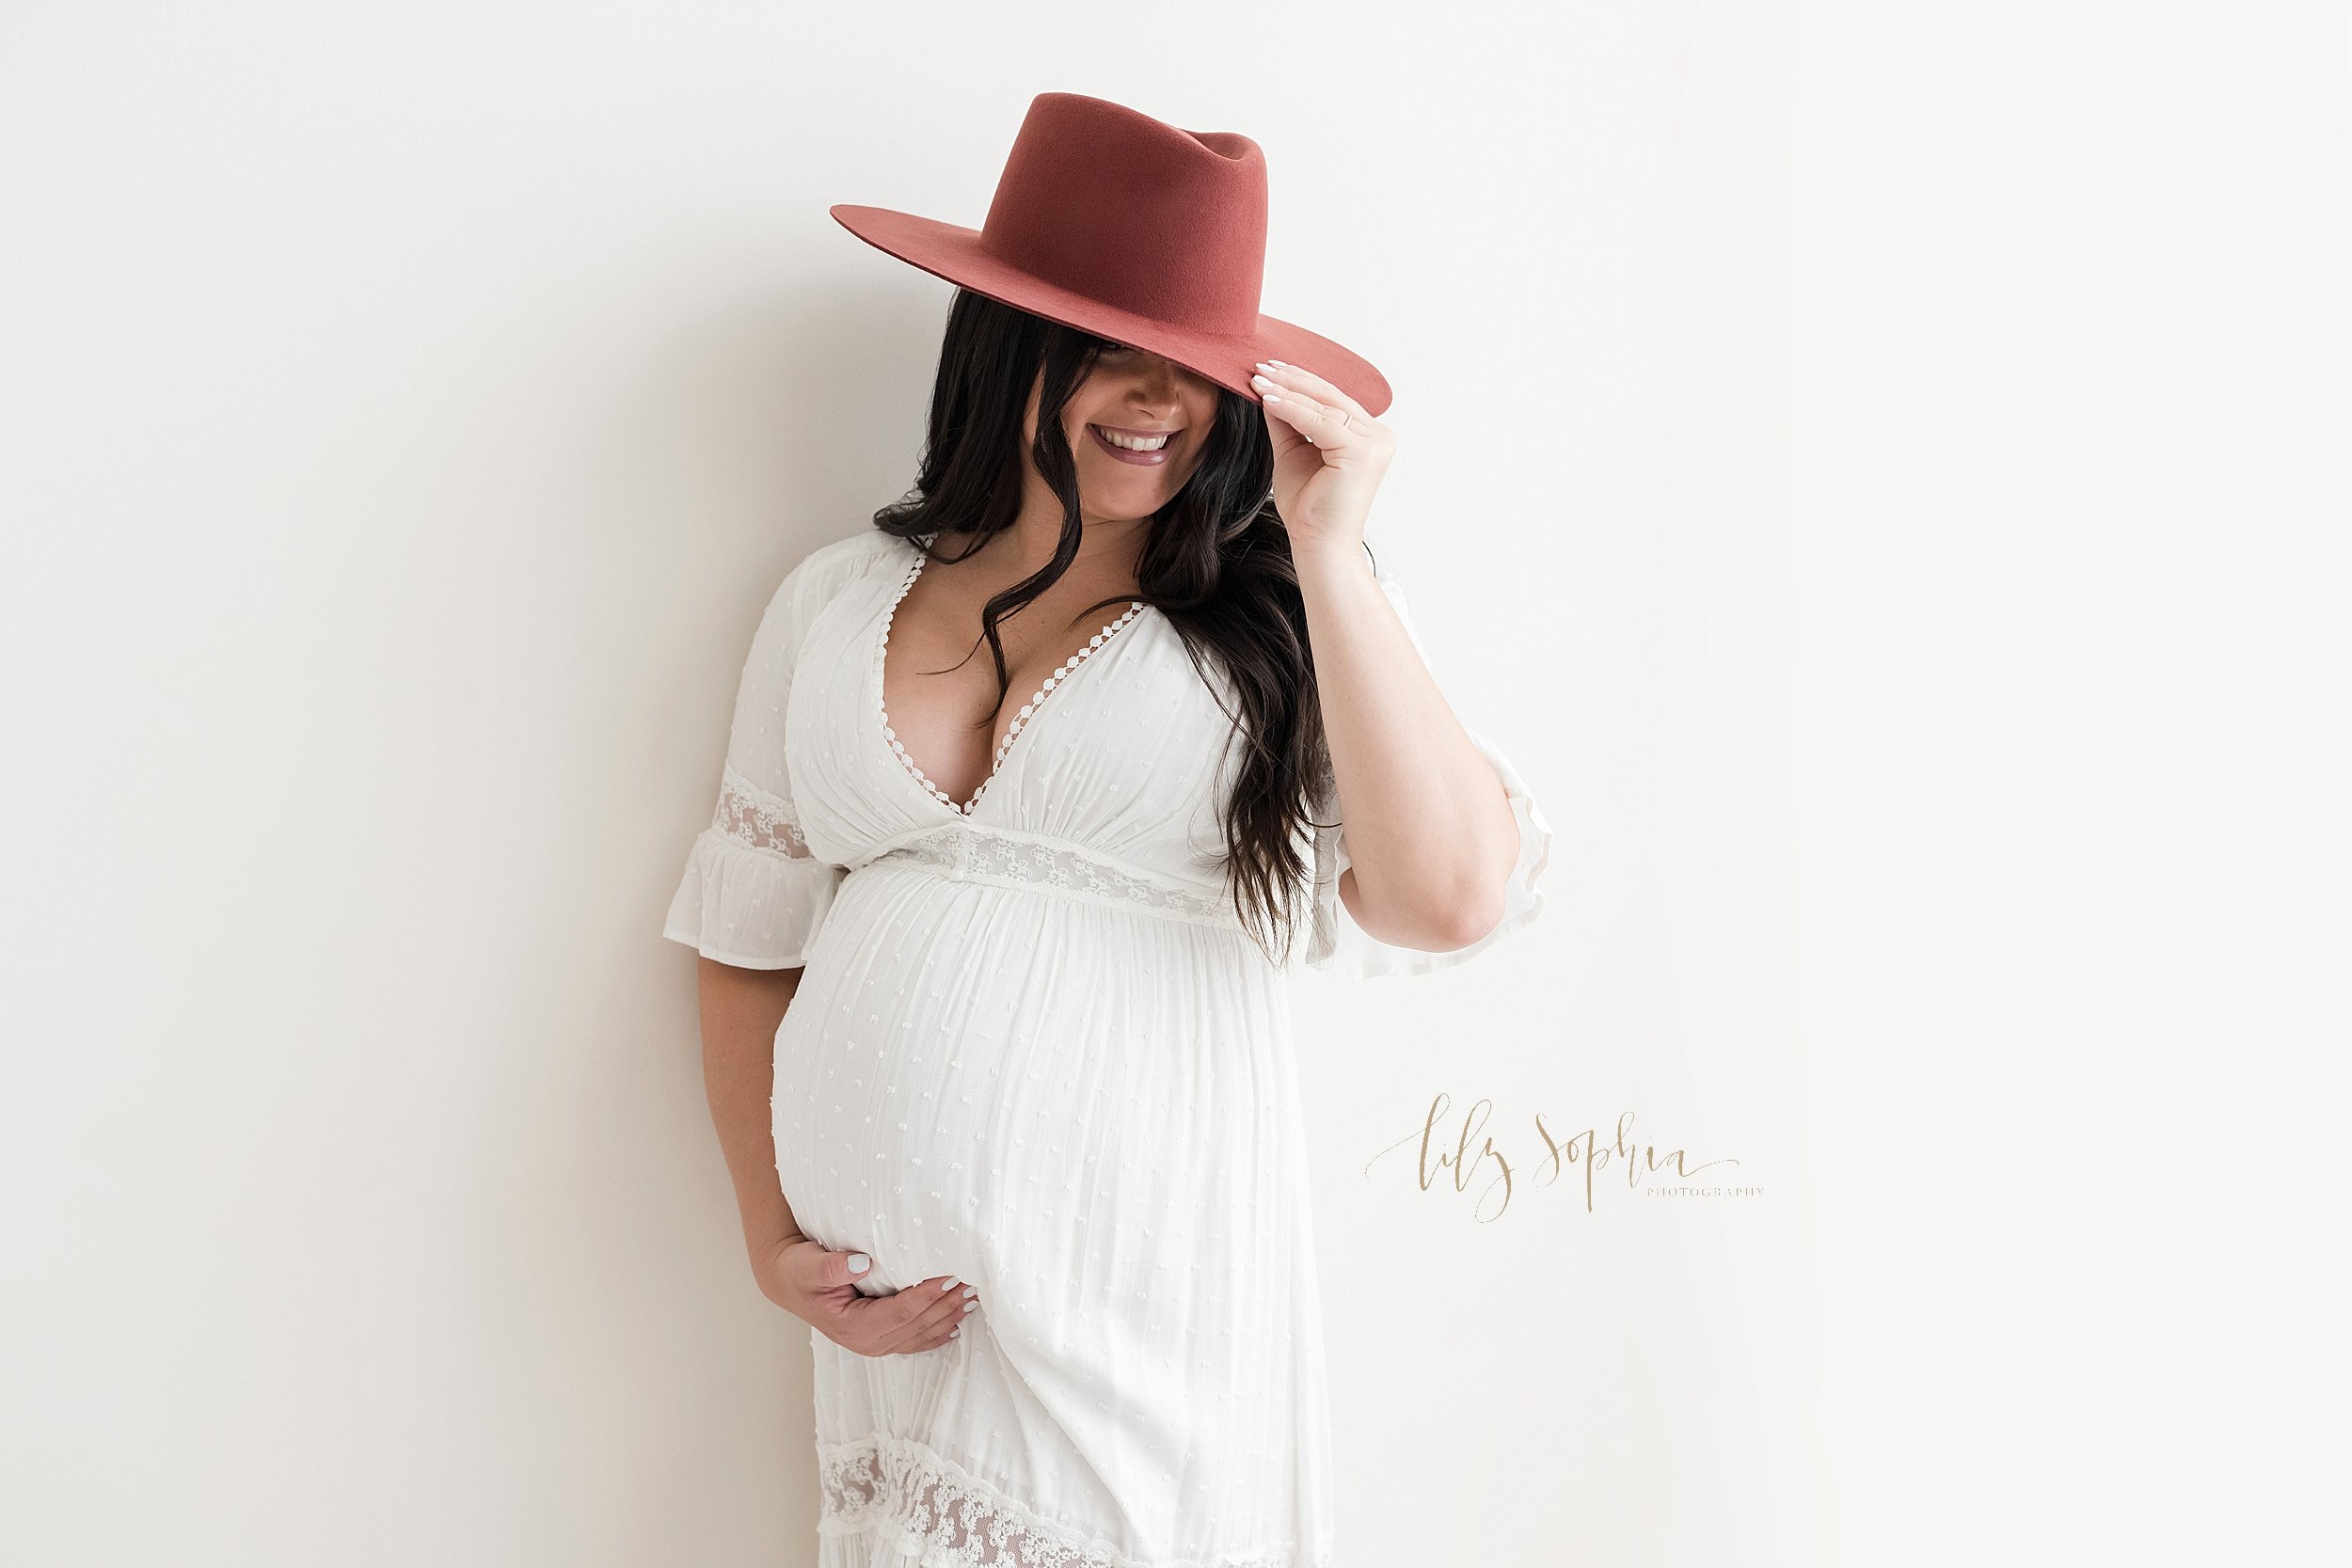 atlanta-pregnancy-photos-expecting-baby-girl-studio-maternity-photoshoot-lawrenceville-oakhurst-decatur-kirkwood--brookhaven-buckhead-smyrna-mableton-midtown-virginia-highlands_8786.jpg